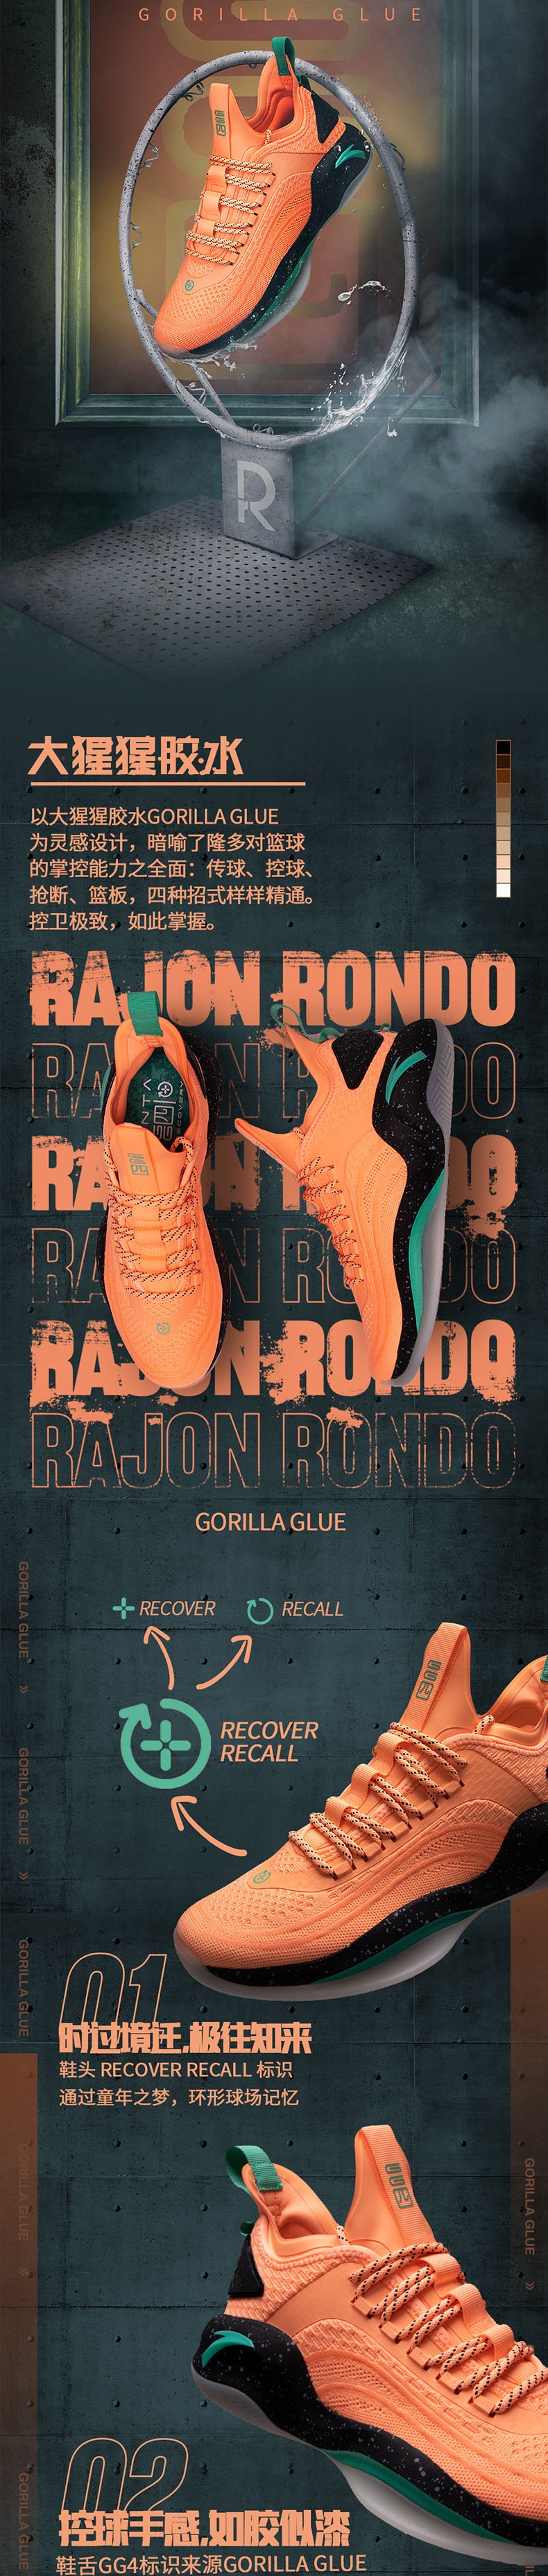 Anta RR6 Rajon Rondo 2020 "GORILLA GLUE" Summer Low Basketball Shoes